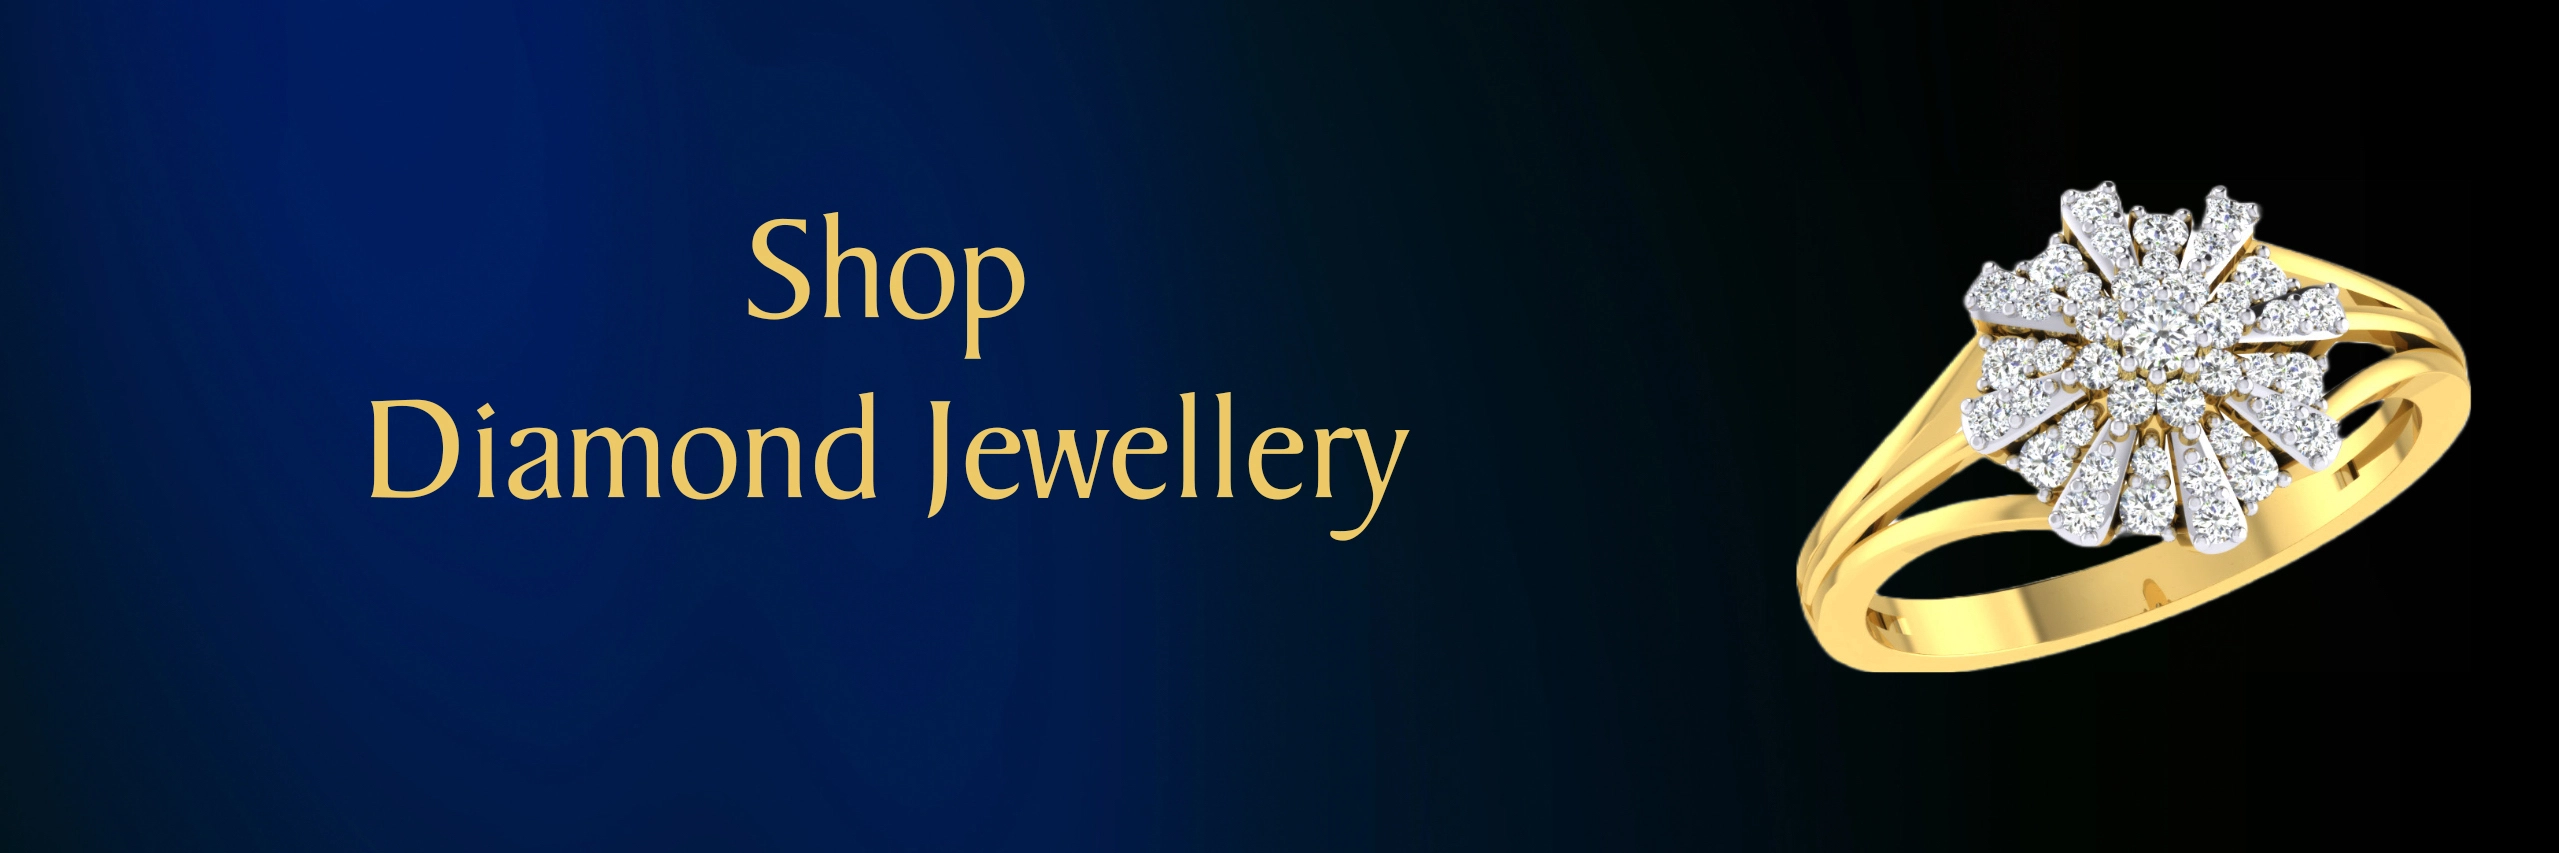 Shop-Diamond-Jewellery-With-Text